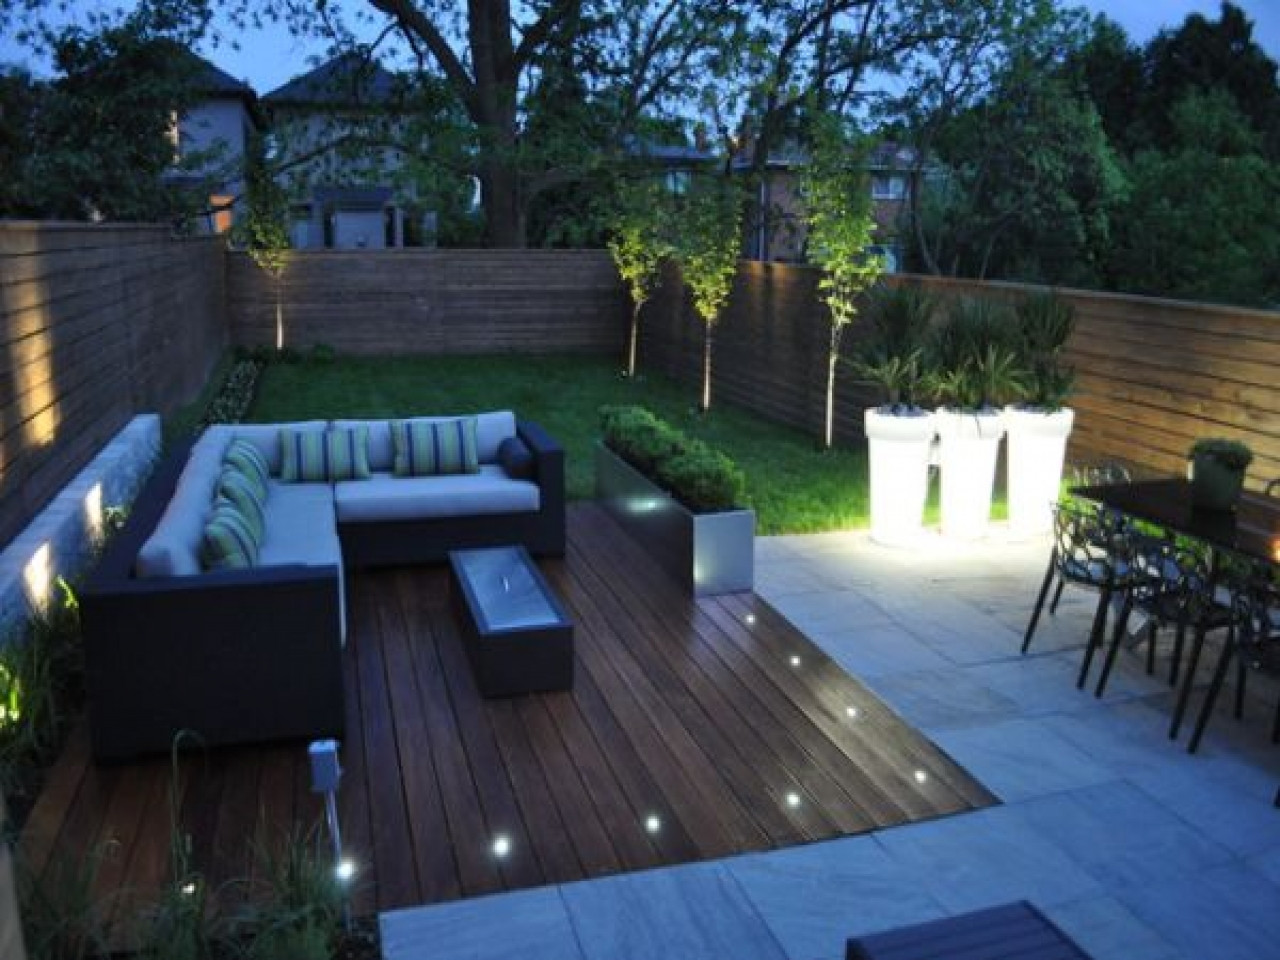 Deck Ideas For Small Backyard
 Raised platforms modern backyard deck design ideas modern